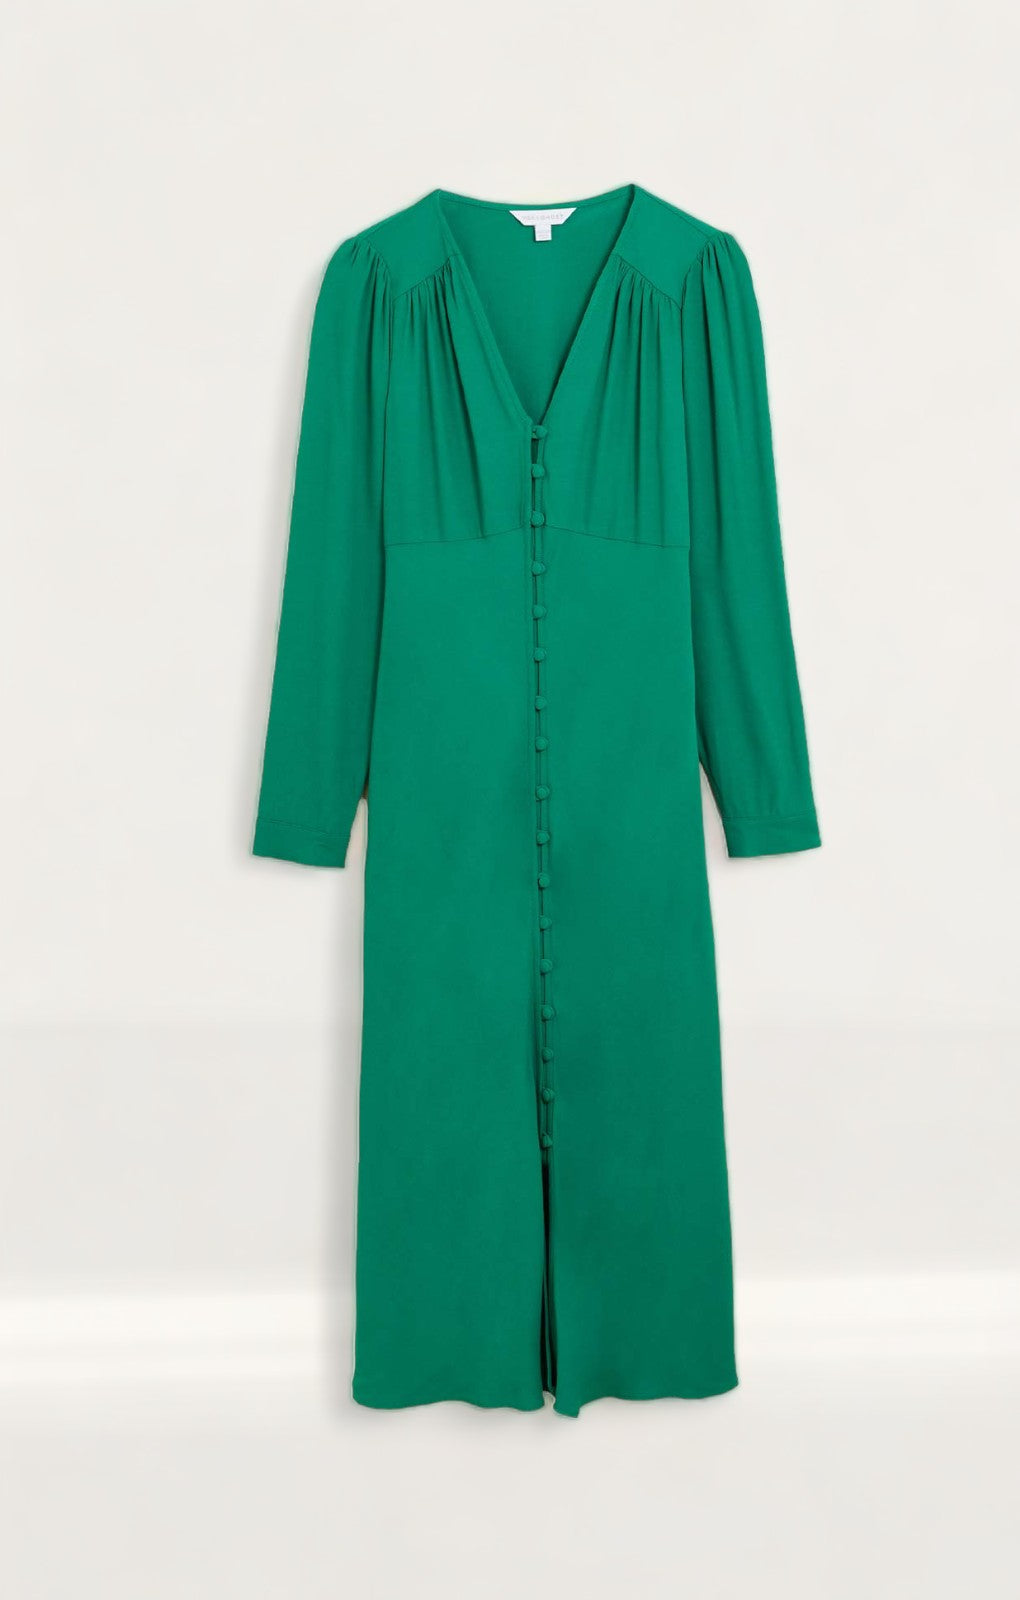 M&S X Ghost Green Long Sleeve Midi Dress product image